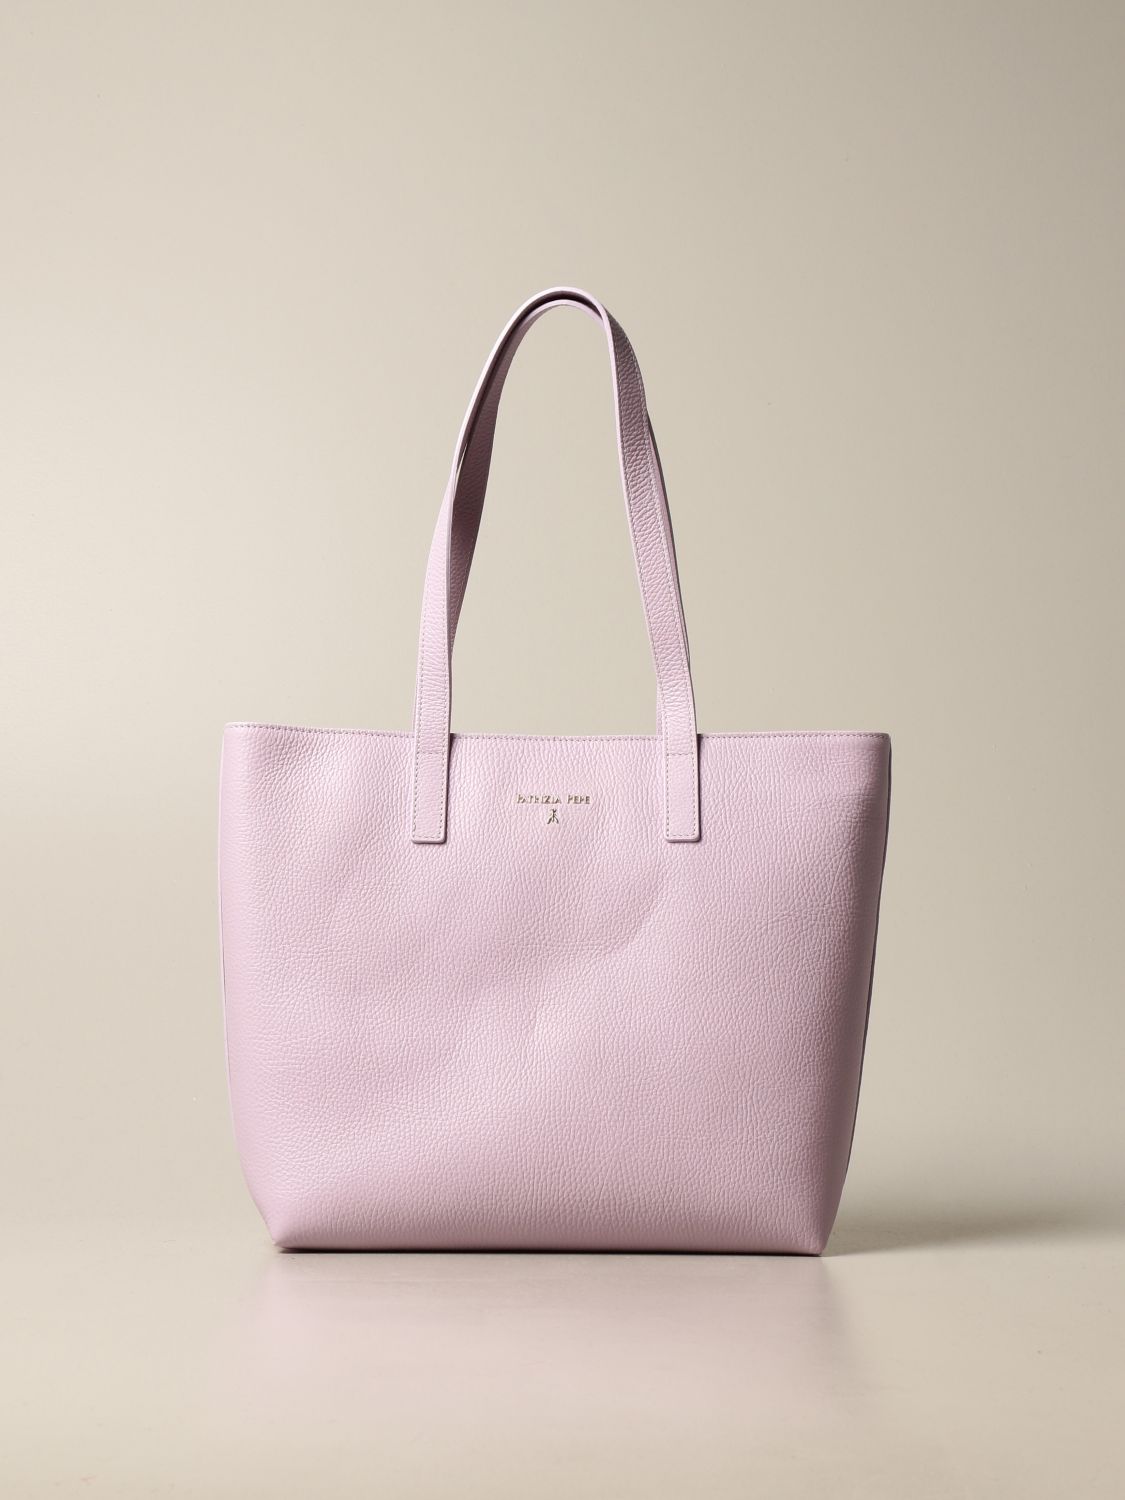 Patrizia Pepe Outlet: handbag for woman - Pink | Patrizia Pepe handbag ...